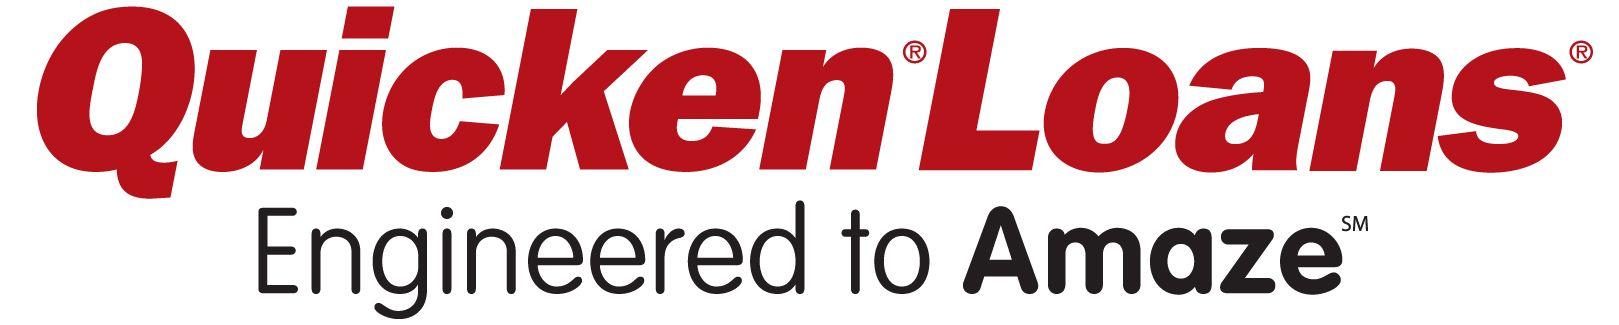 Quicken Loans Logo - File:QuickenLoans-logo.jpg - Wikimedia Commons